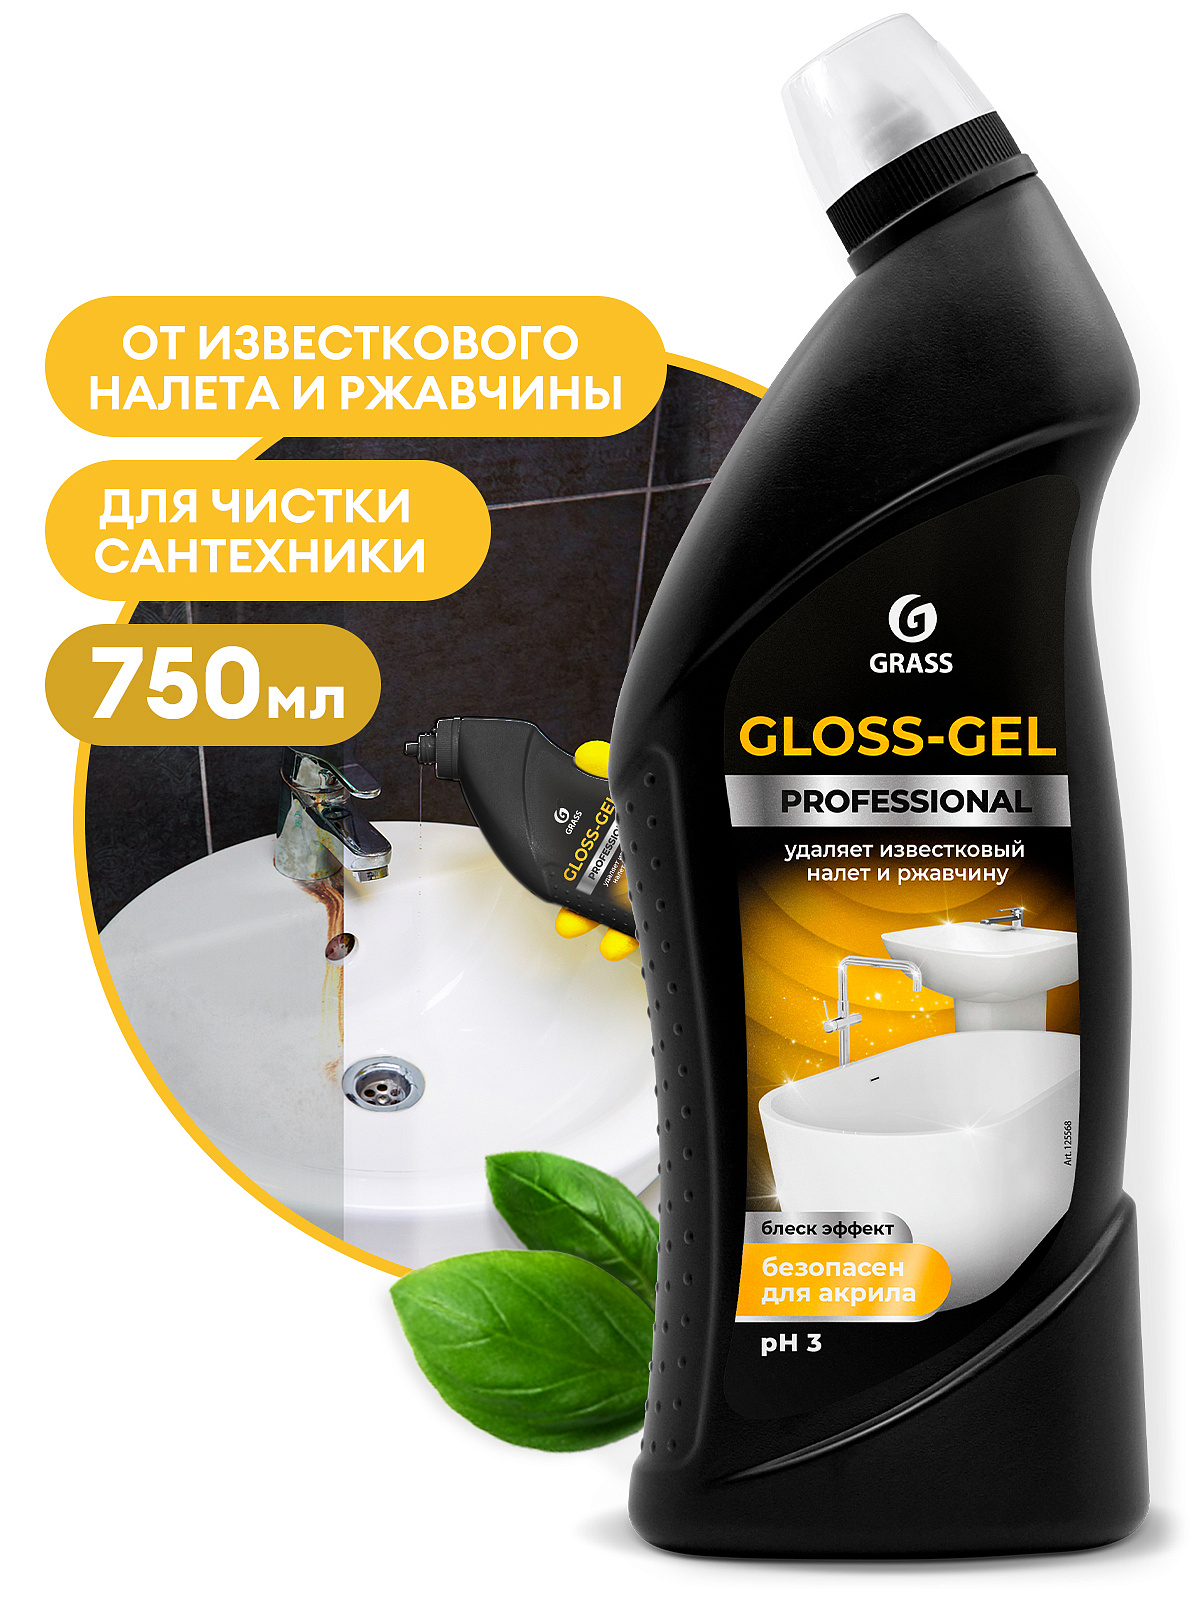 Grass Gloss-Gel Professional Чистящее средство для сан.узлов и ванных комнат (флакон 750 мл)